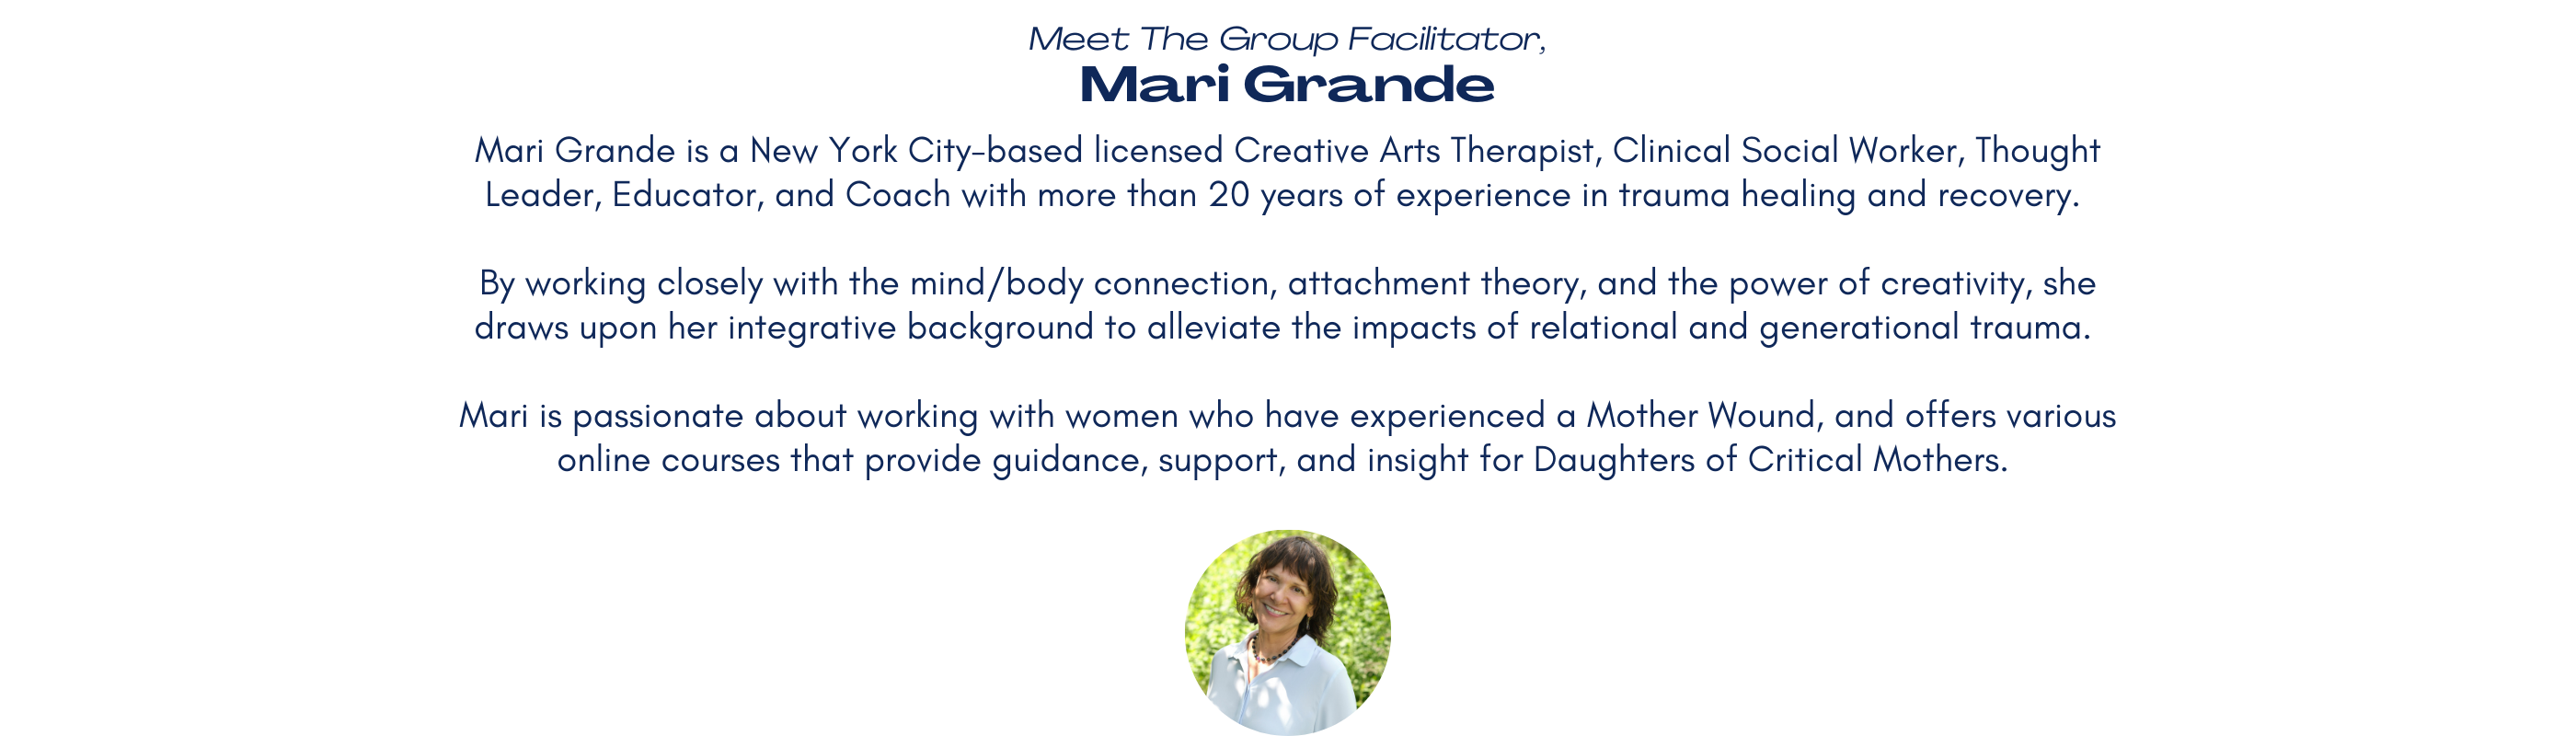 Meet The Group Facilitator, Mari Grande